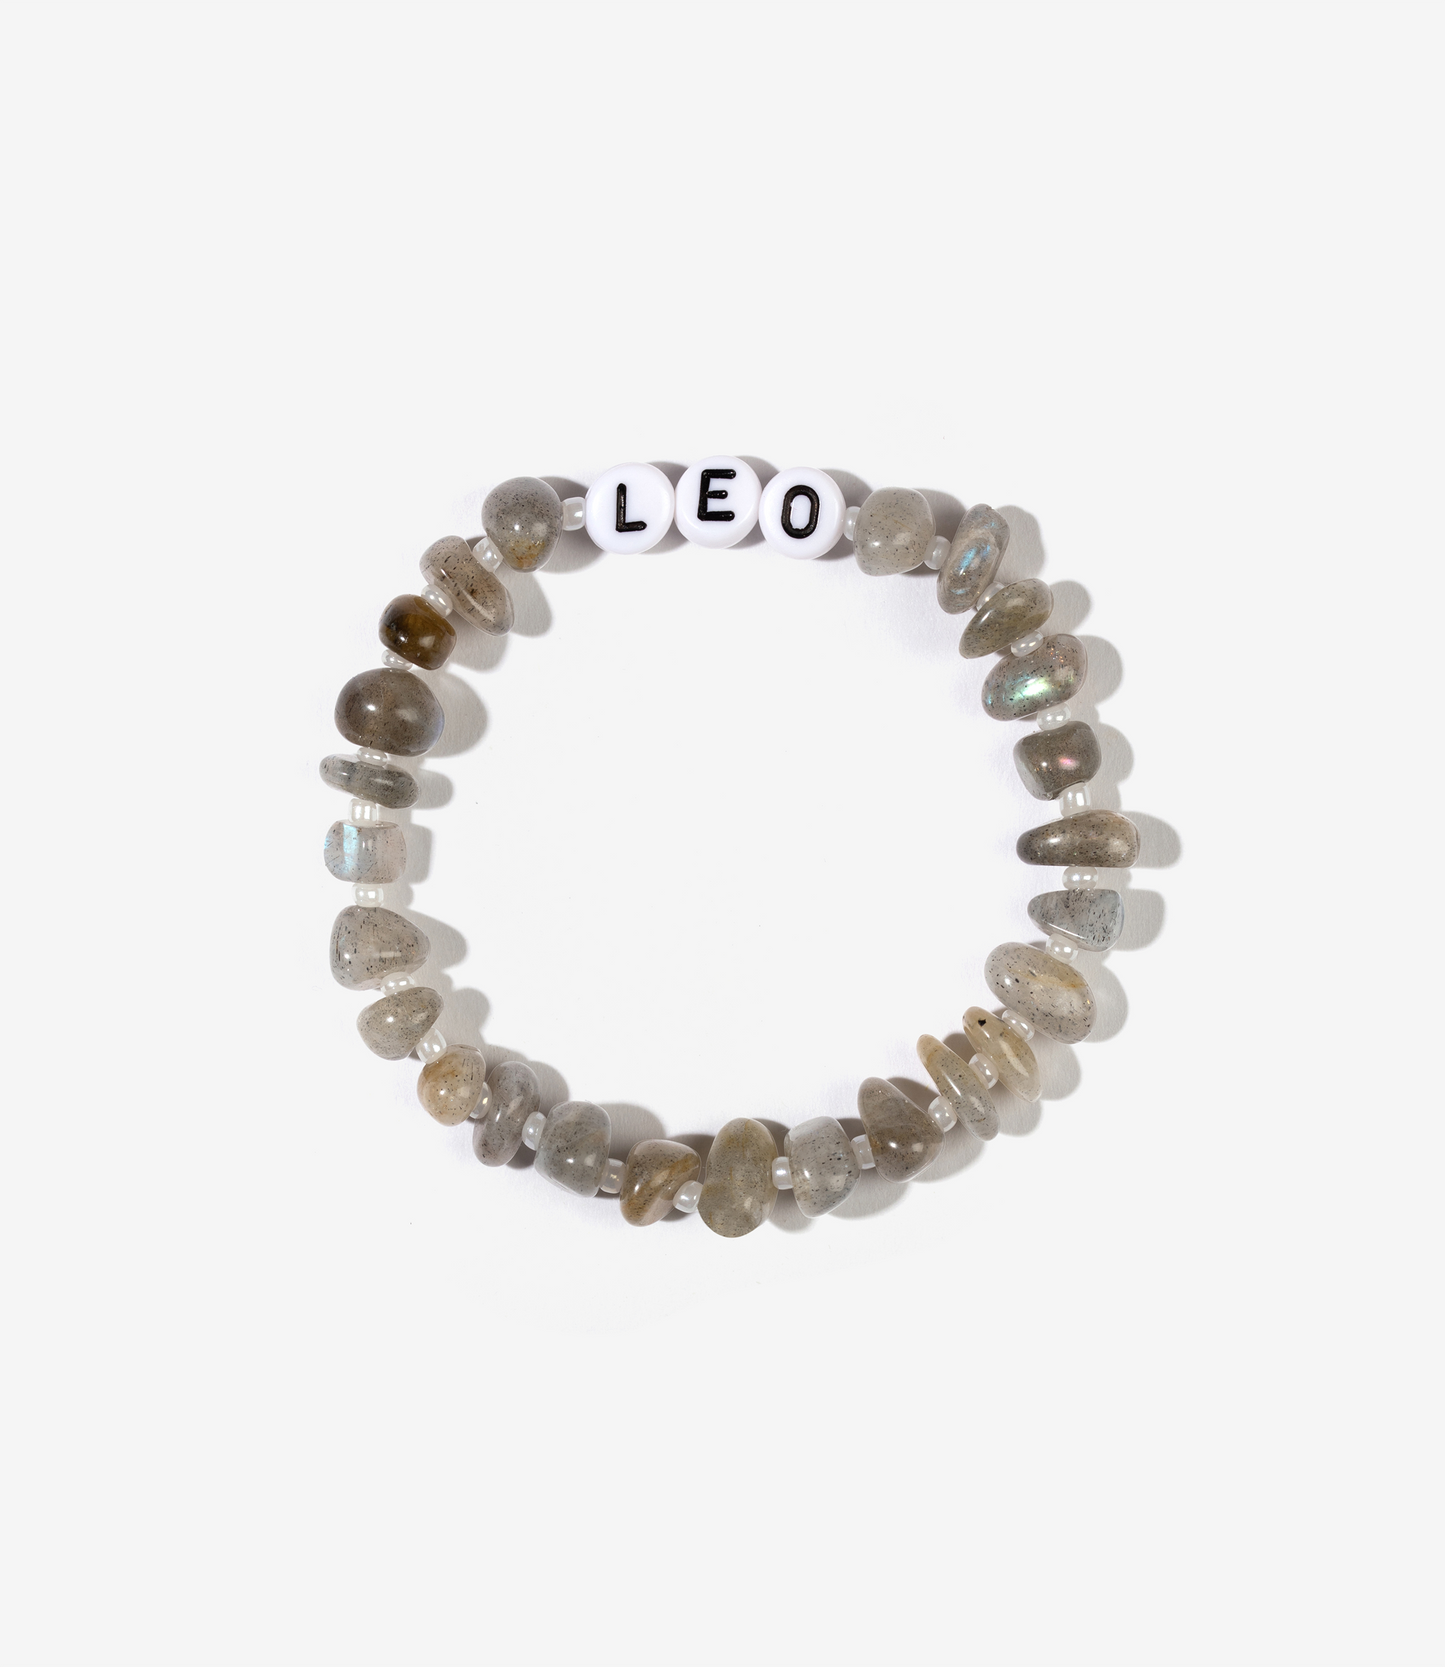 LEO Labradorite Crystal Healing Bracelet